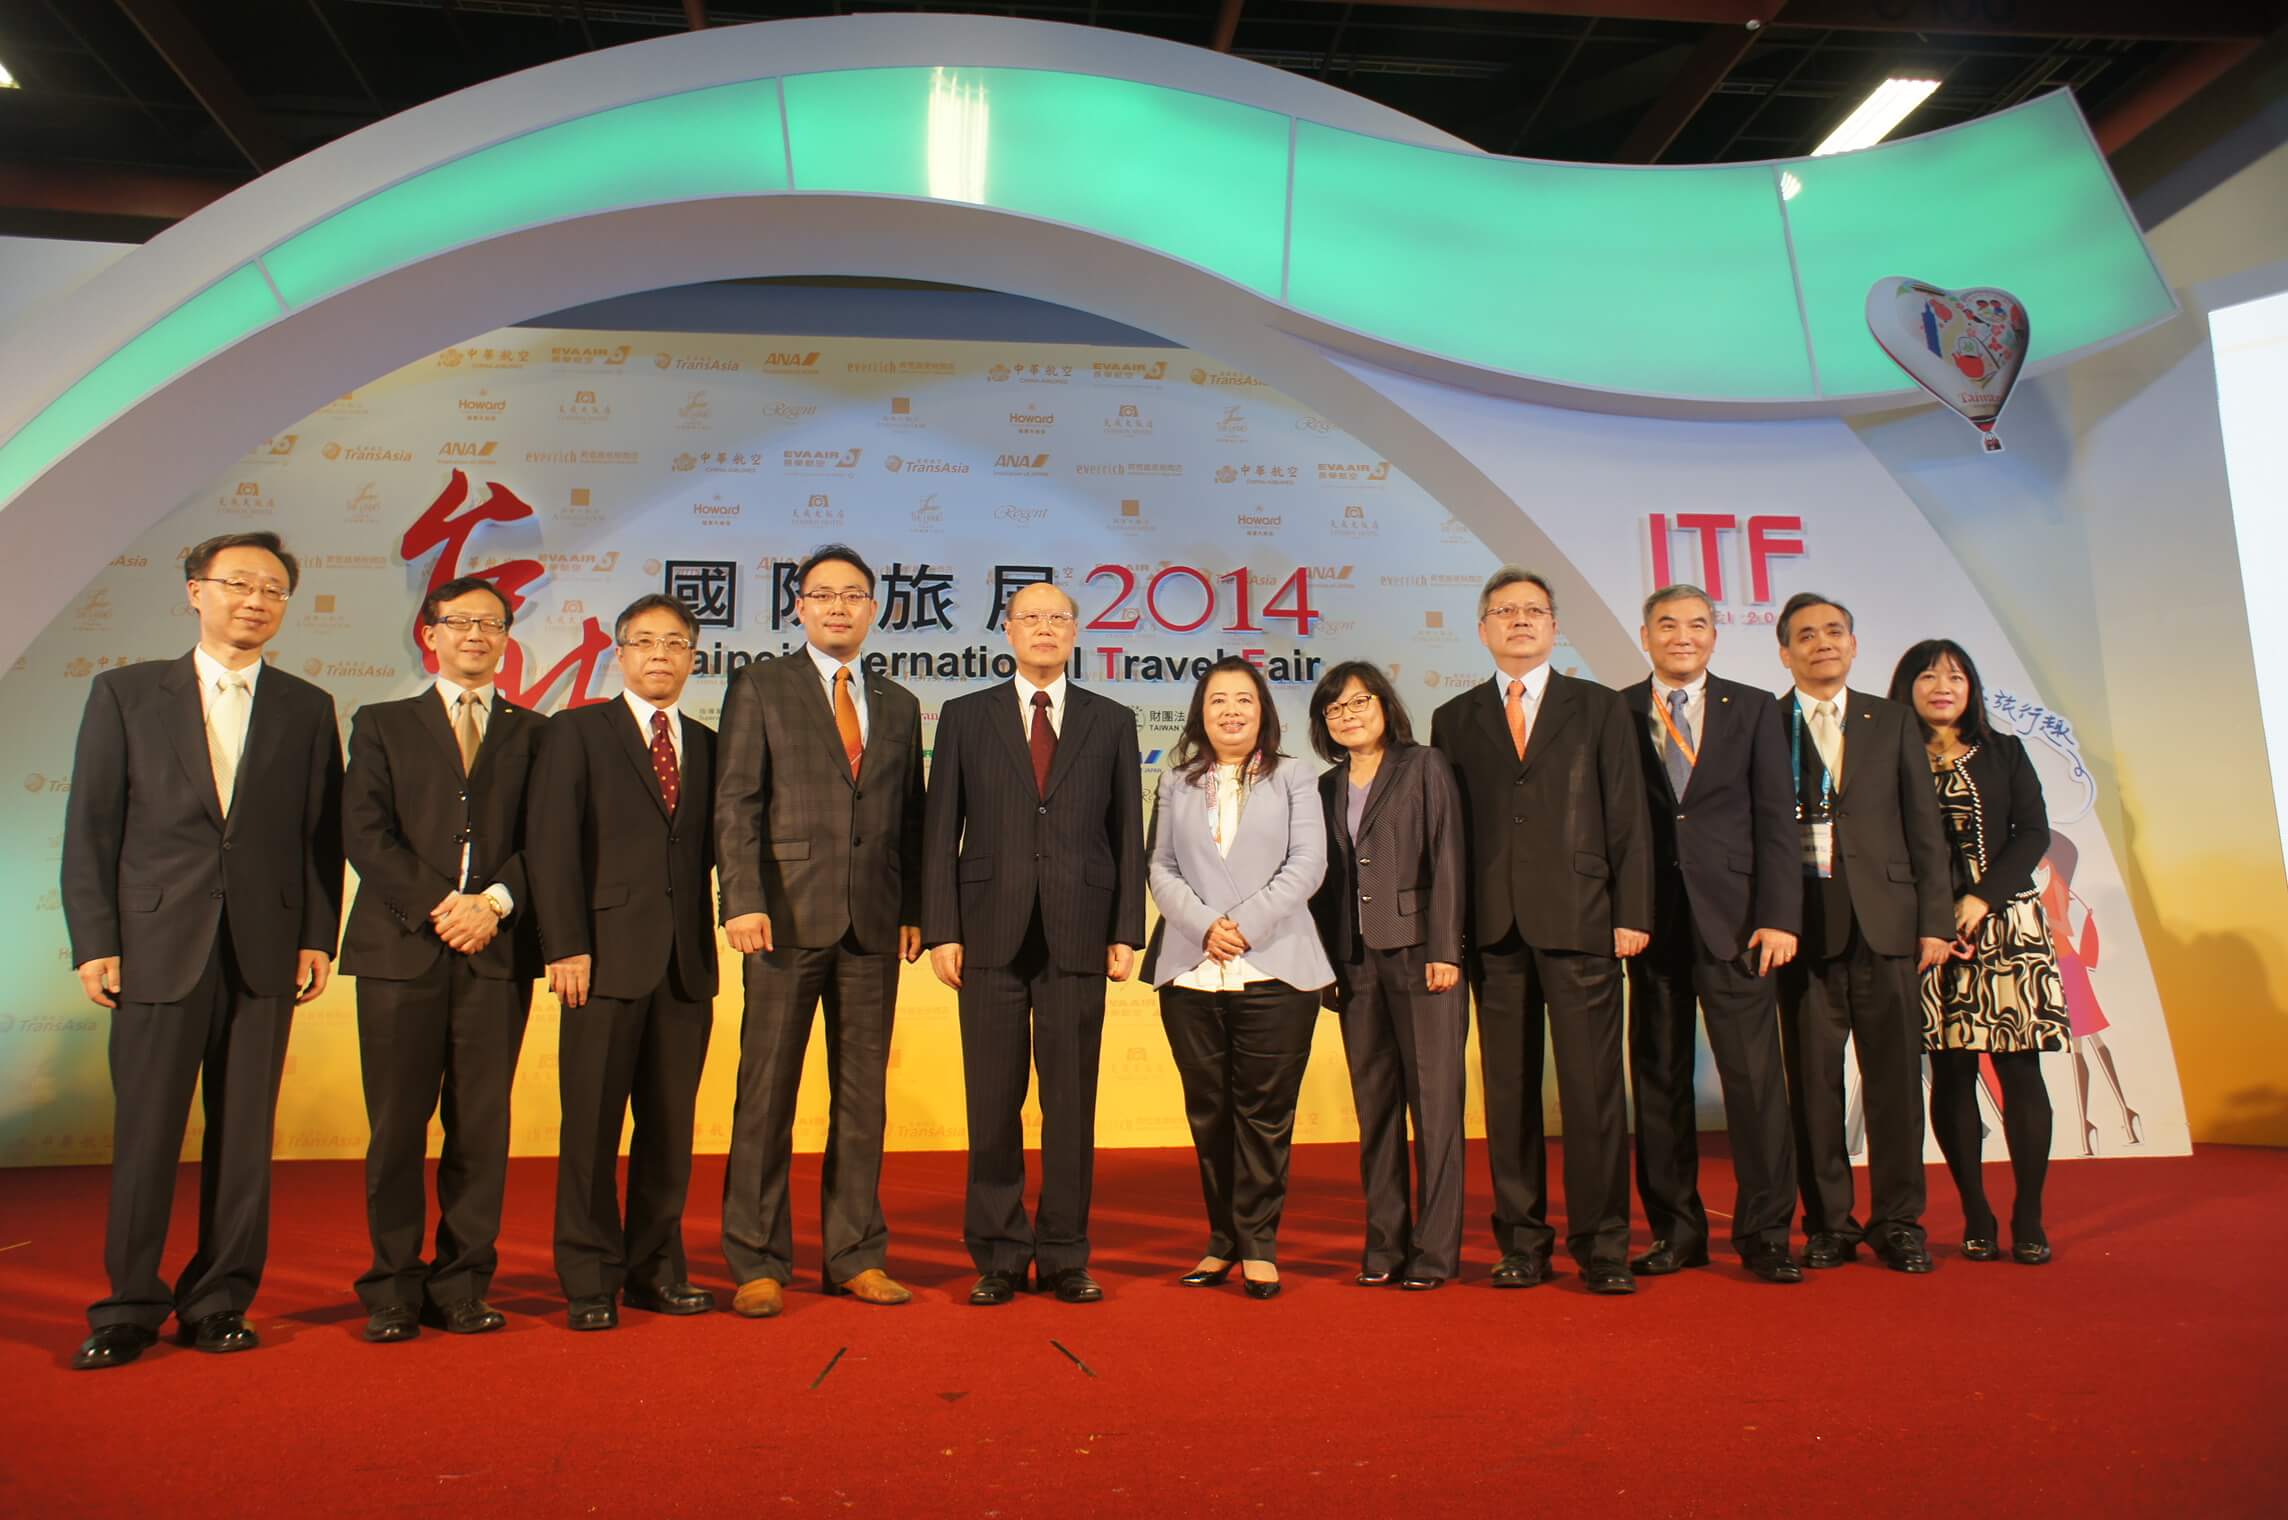 BOCA Participated in the Taipei International Travel Fair from November 7-10, 2014